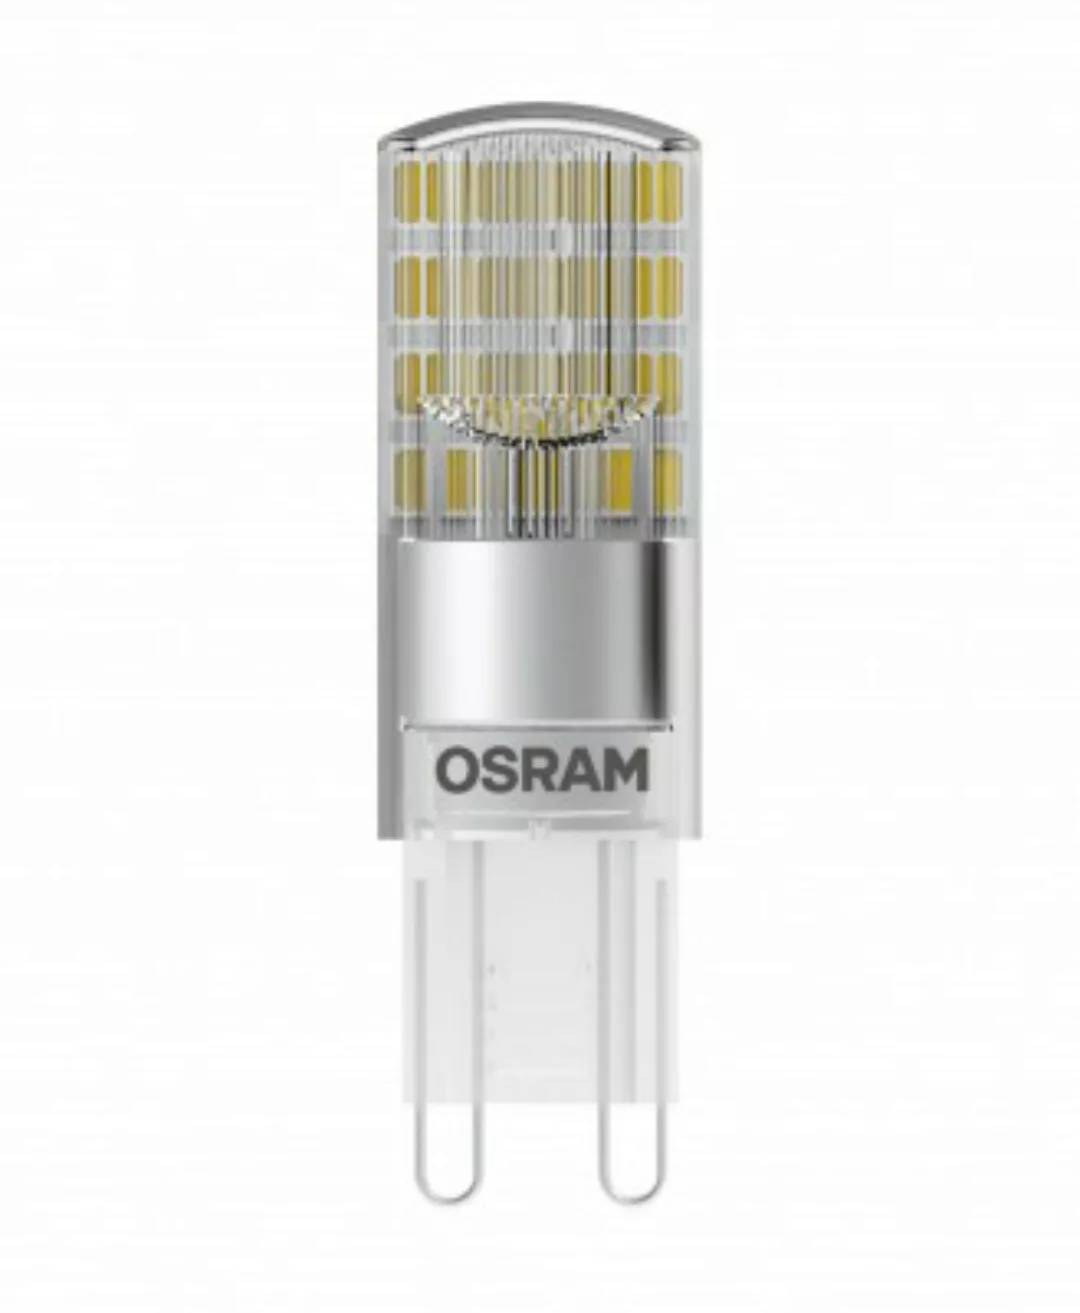 OSRAM LED STAR PIN 30 (300°) BLI Warmweiß SMD Klar G9 Stiftsockellampe günstig online kaufen